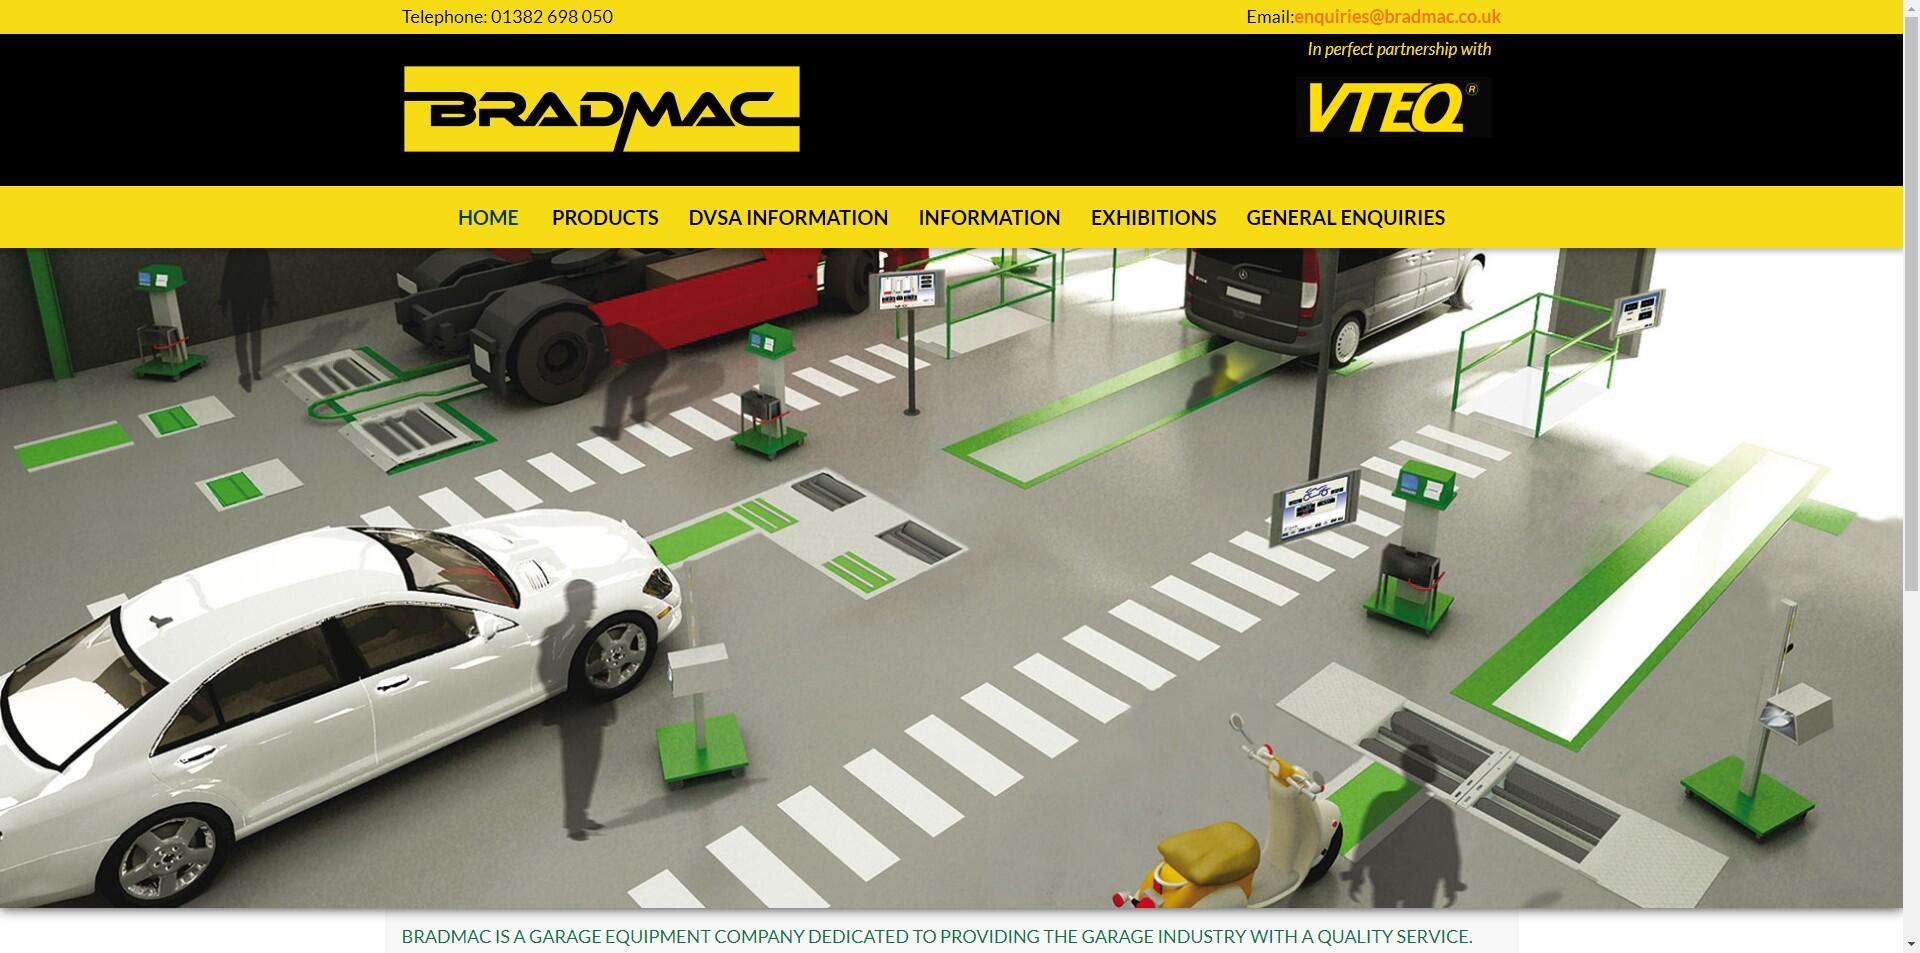 website designed for BRADMAC Garage Equipment